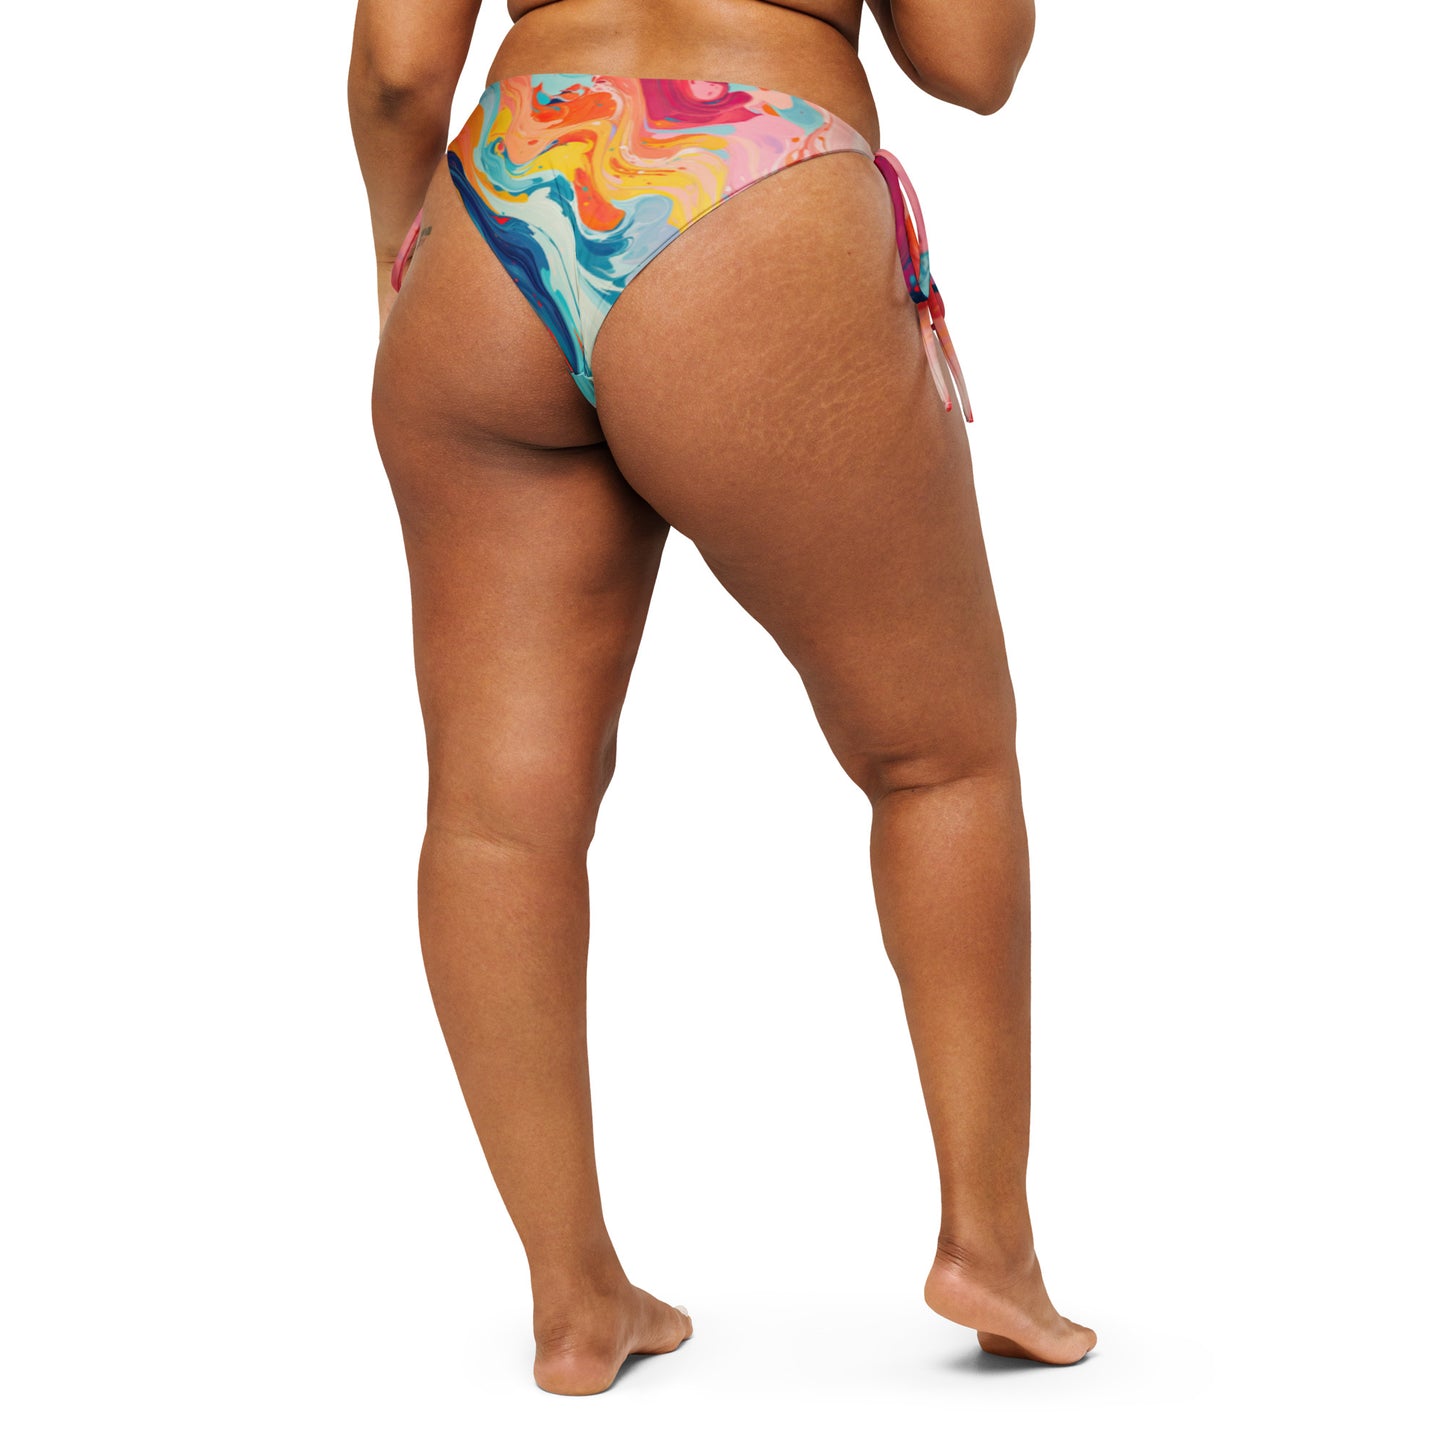 Painted Lady string bikini bottom